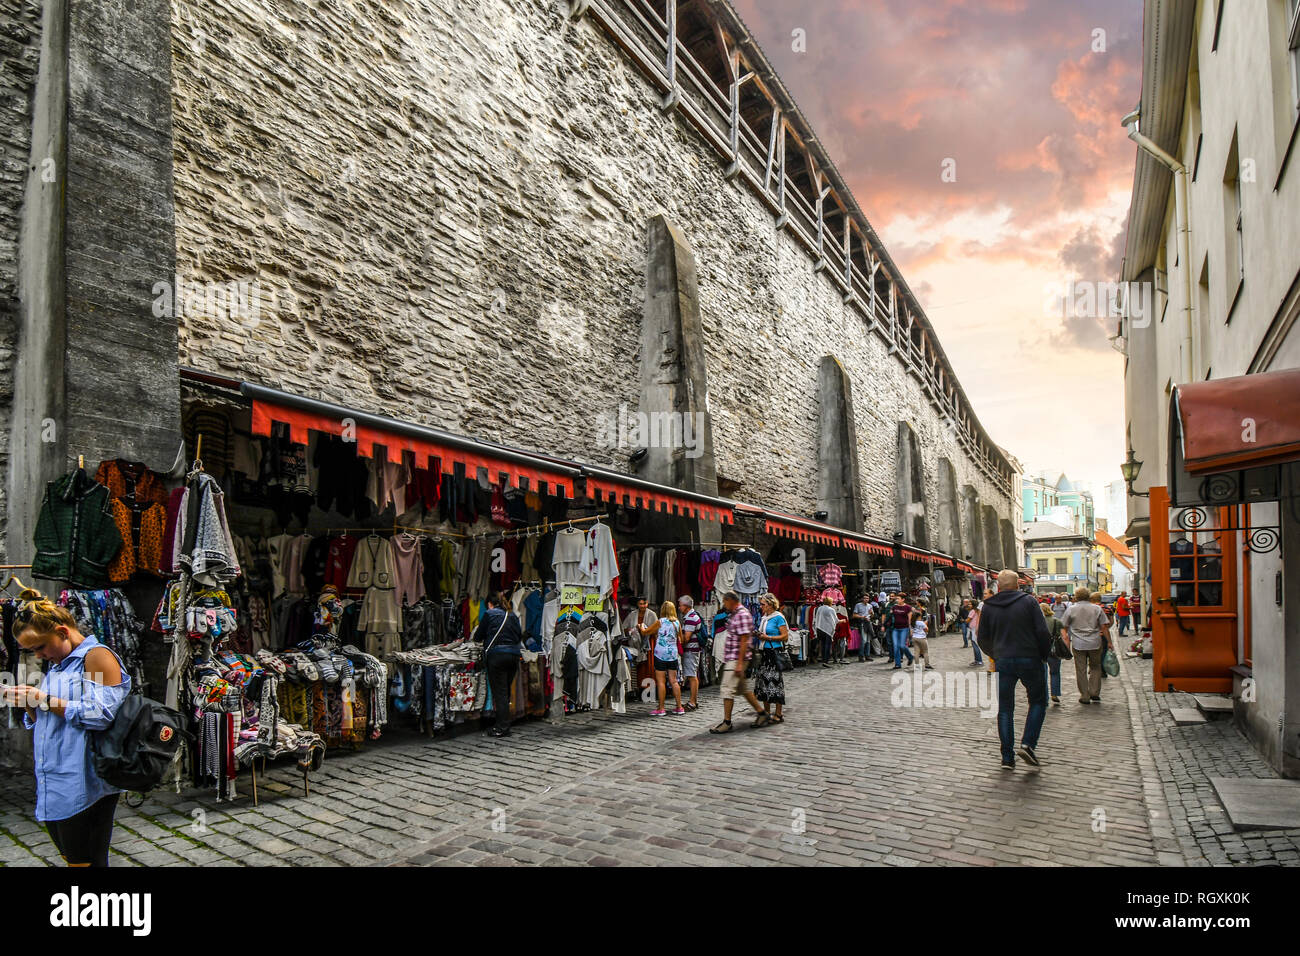 Tallinn, Estonia - September 10 2018: Tourists shop an outdoor marketplace under the medieval city walls of Tallinn, Estonia Stock Photo